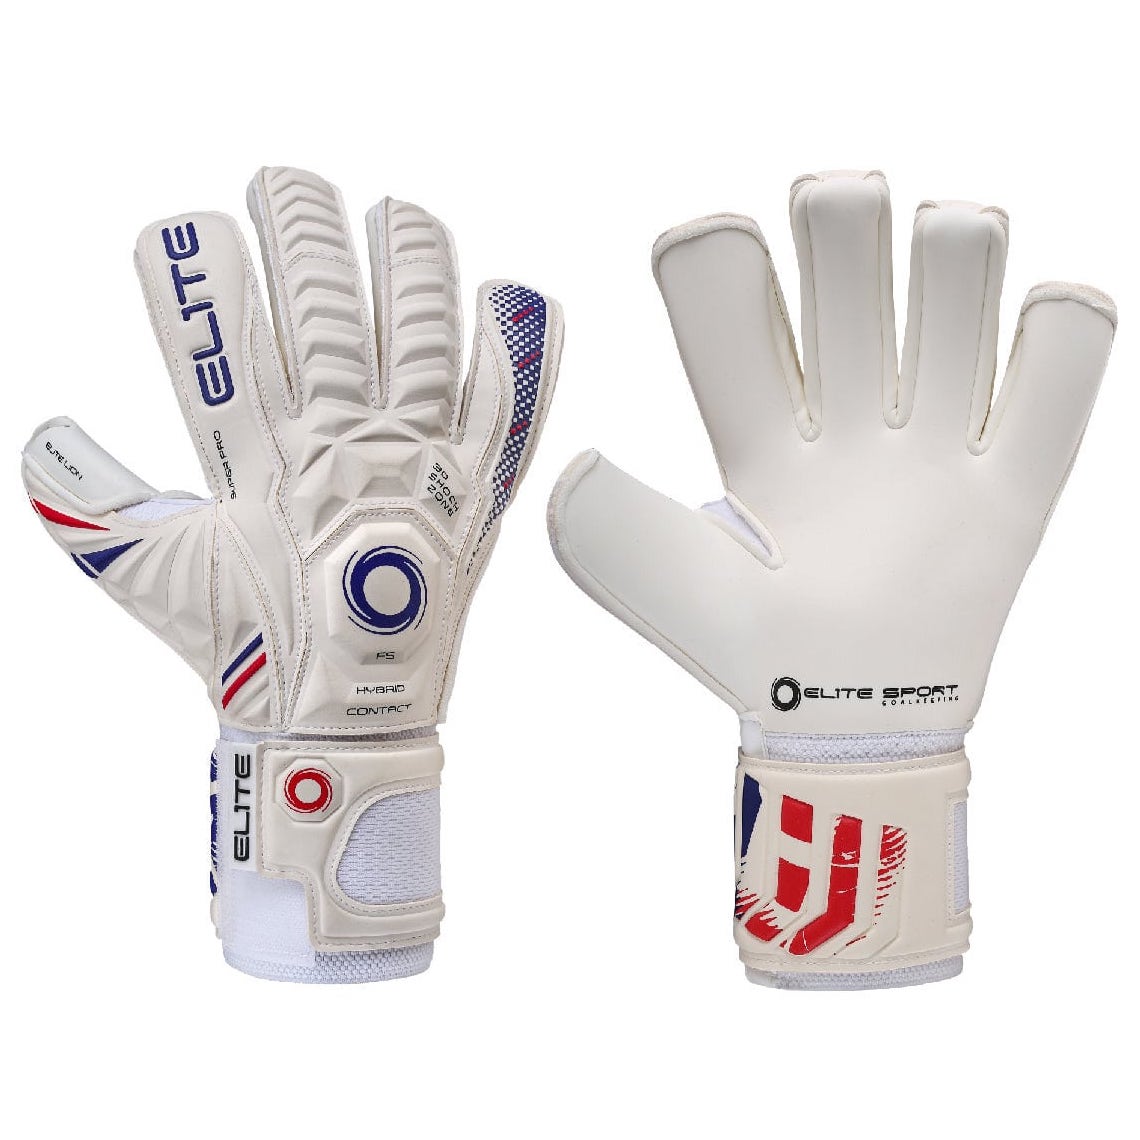 Elite Sport Lion 5FS Goalkeeper Glove - White (Pair)